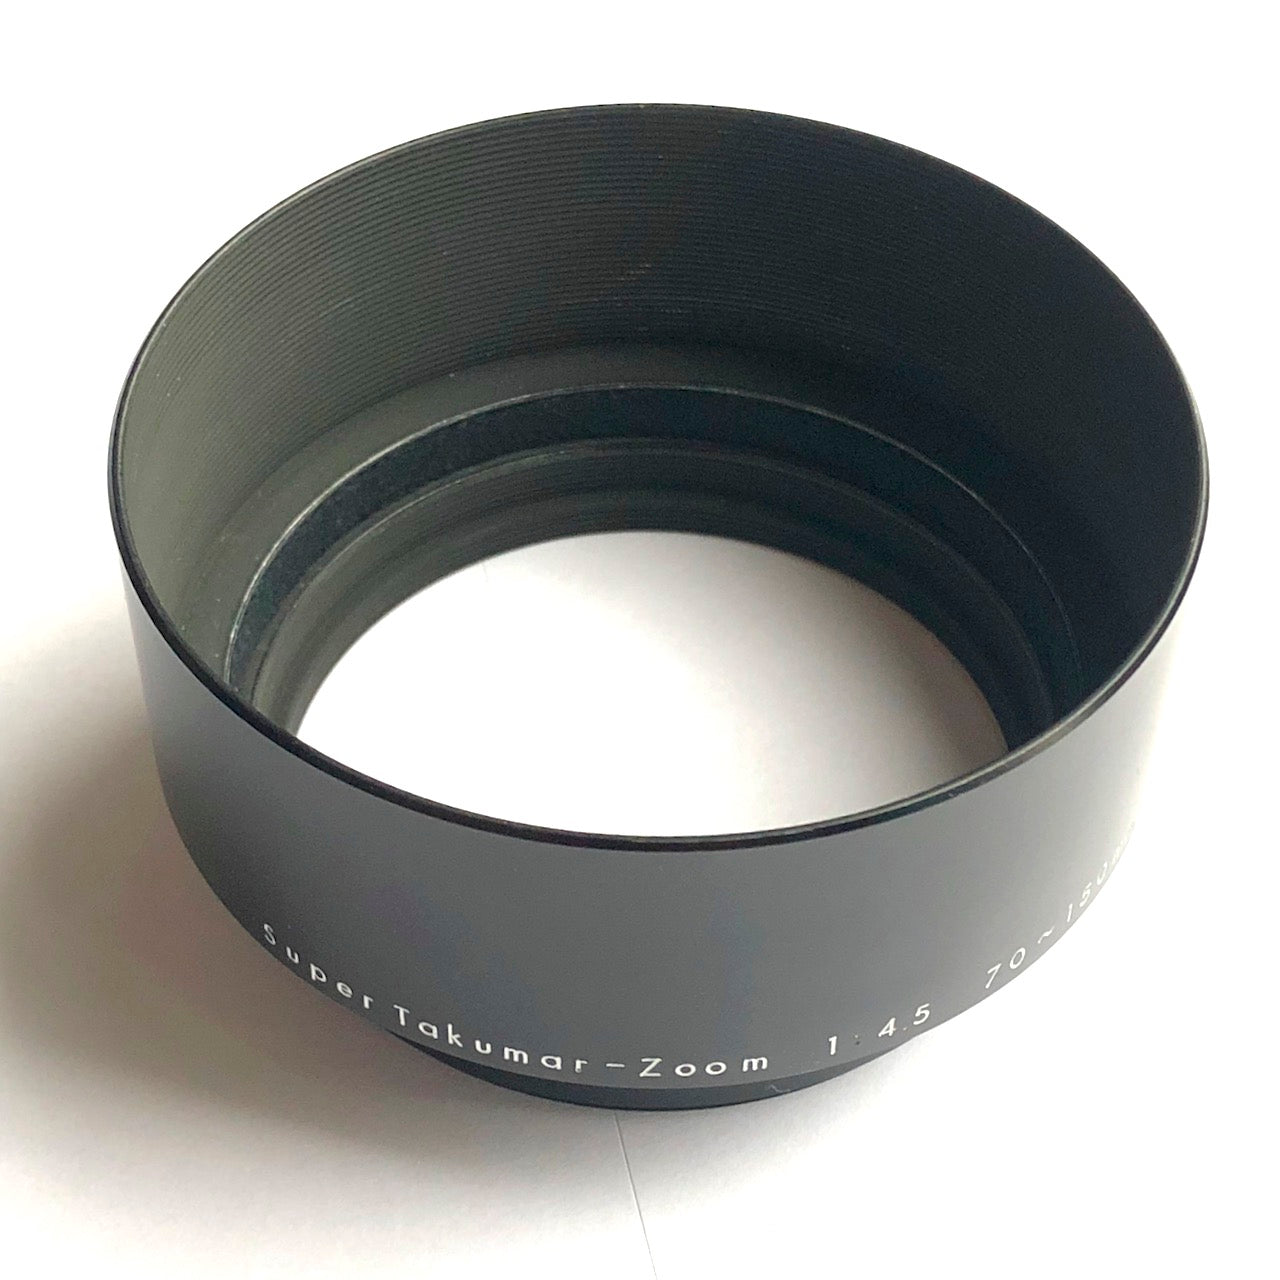 Asahi Takumar lens hood for Super-Takumar Zoom 70-150mm f4.5